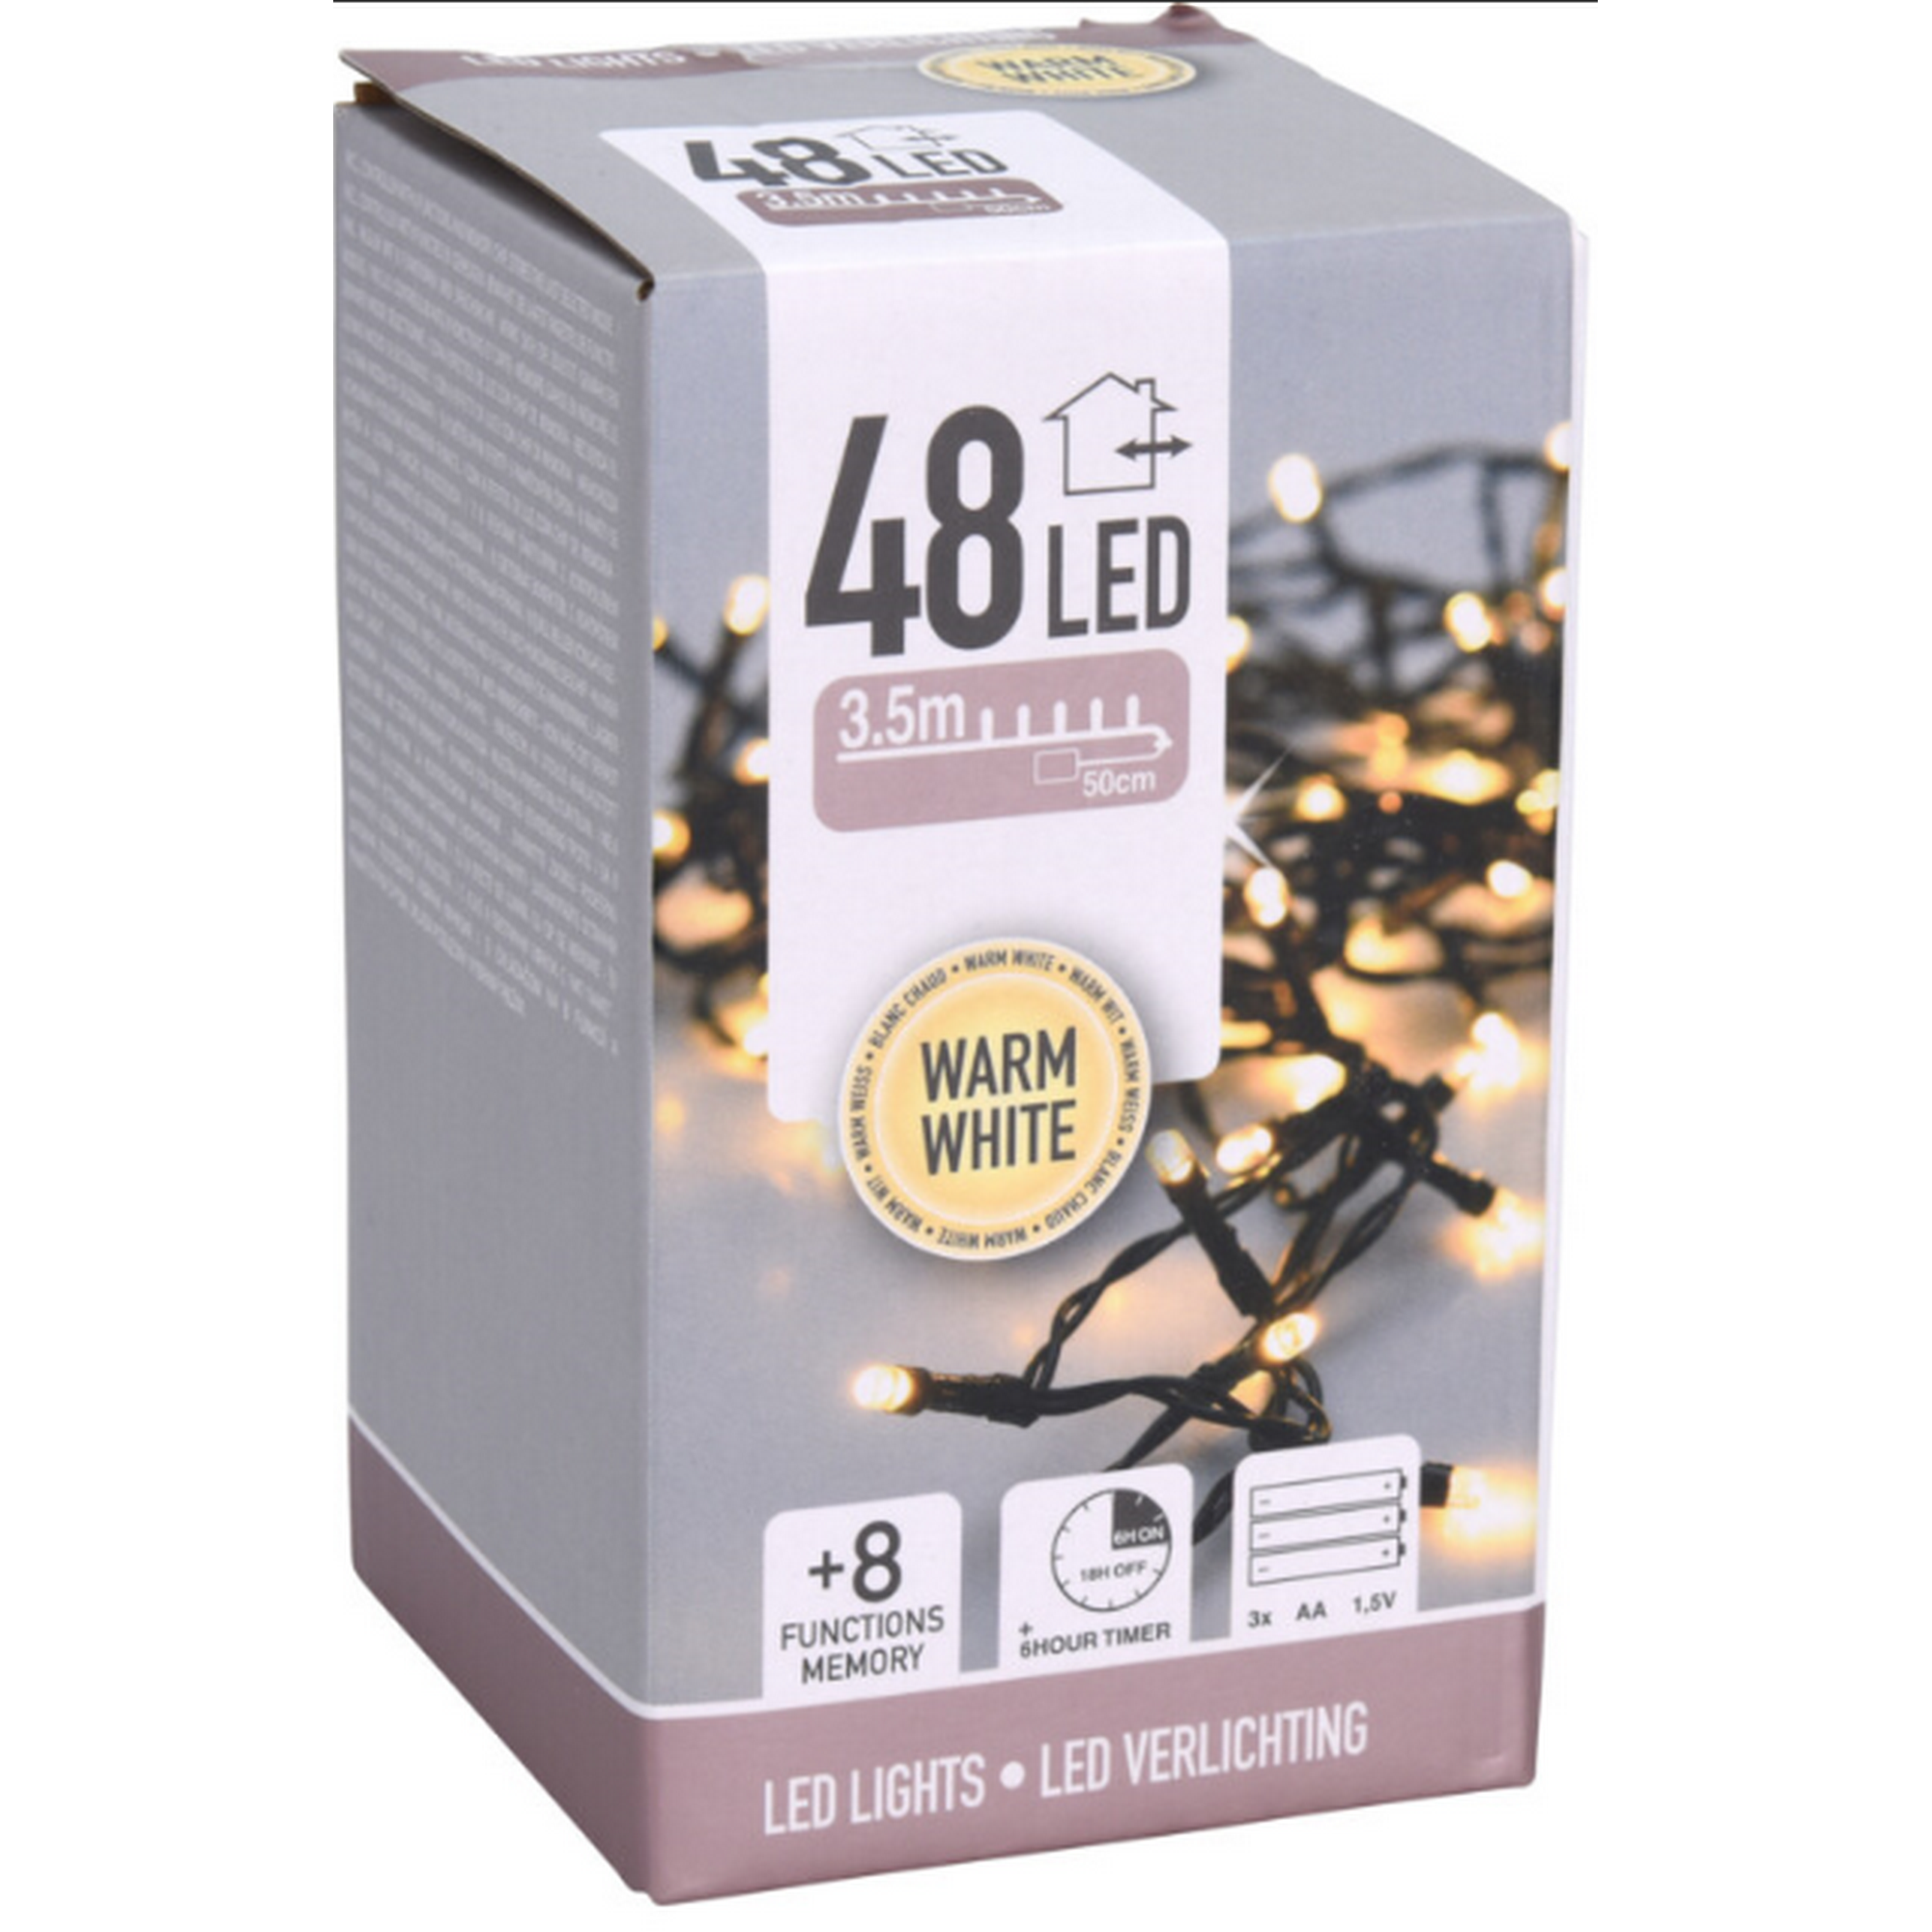 LED-Lichterkette 48 LEDs warmweiß 350 cm + product picture